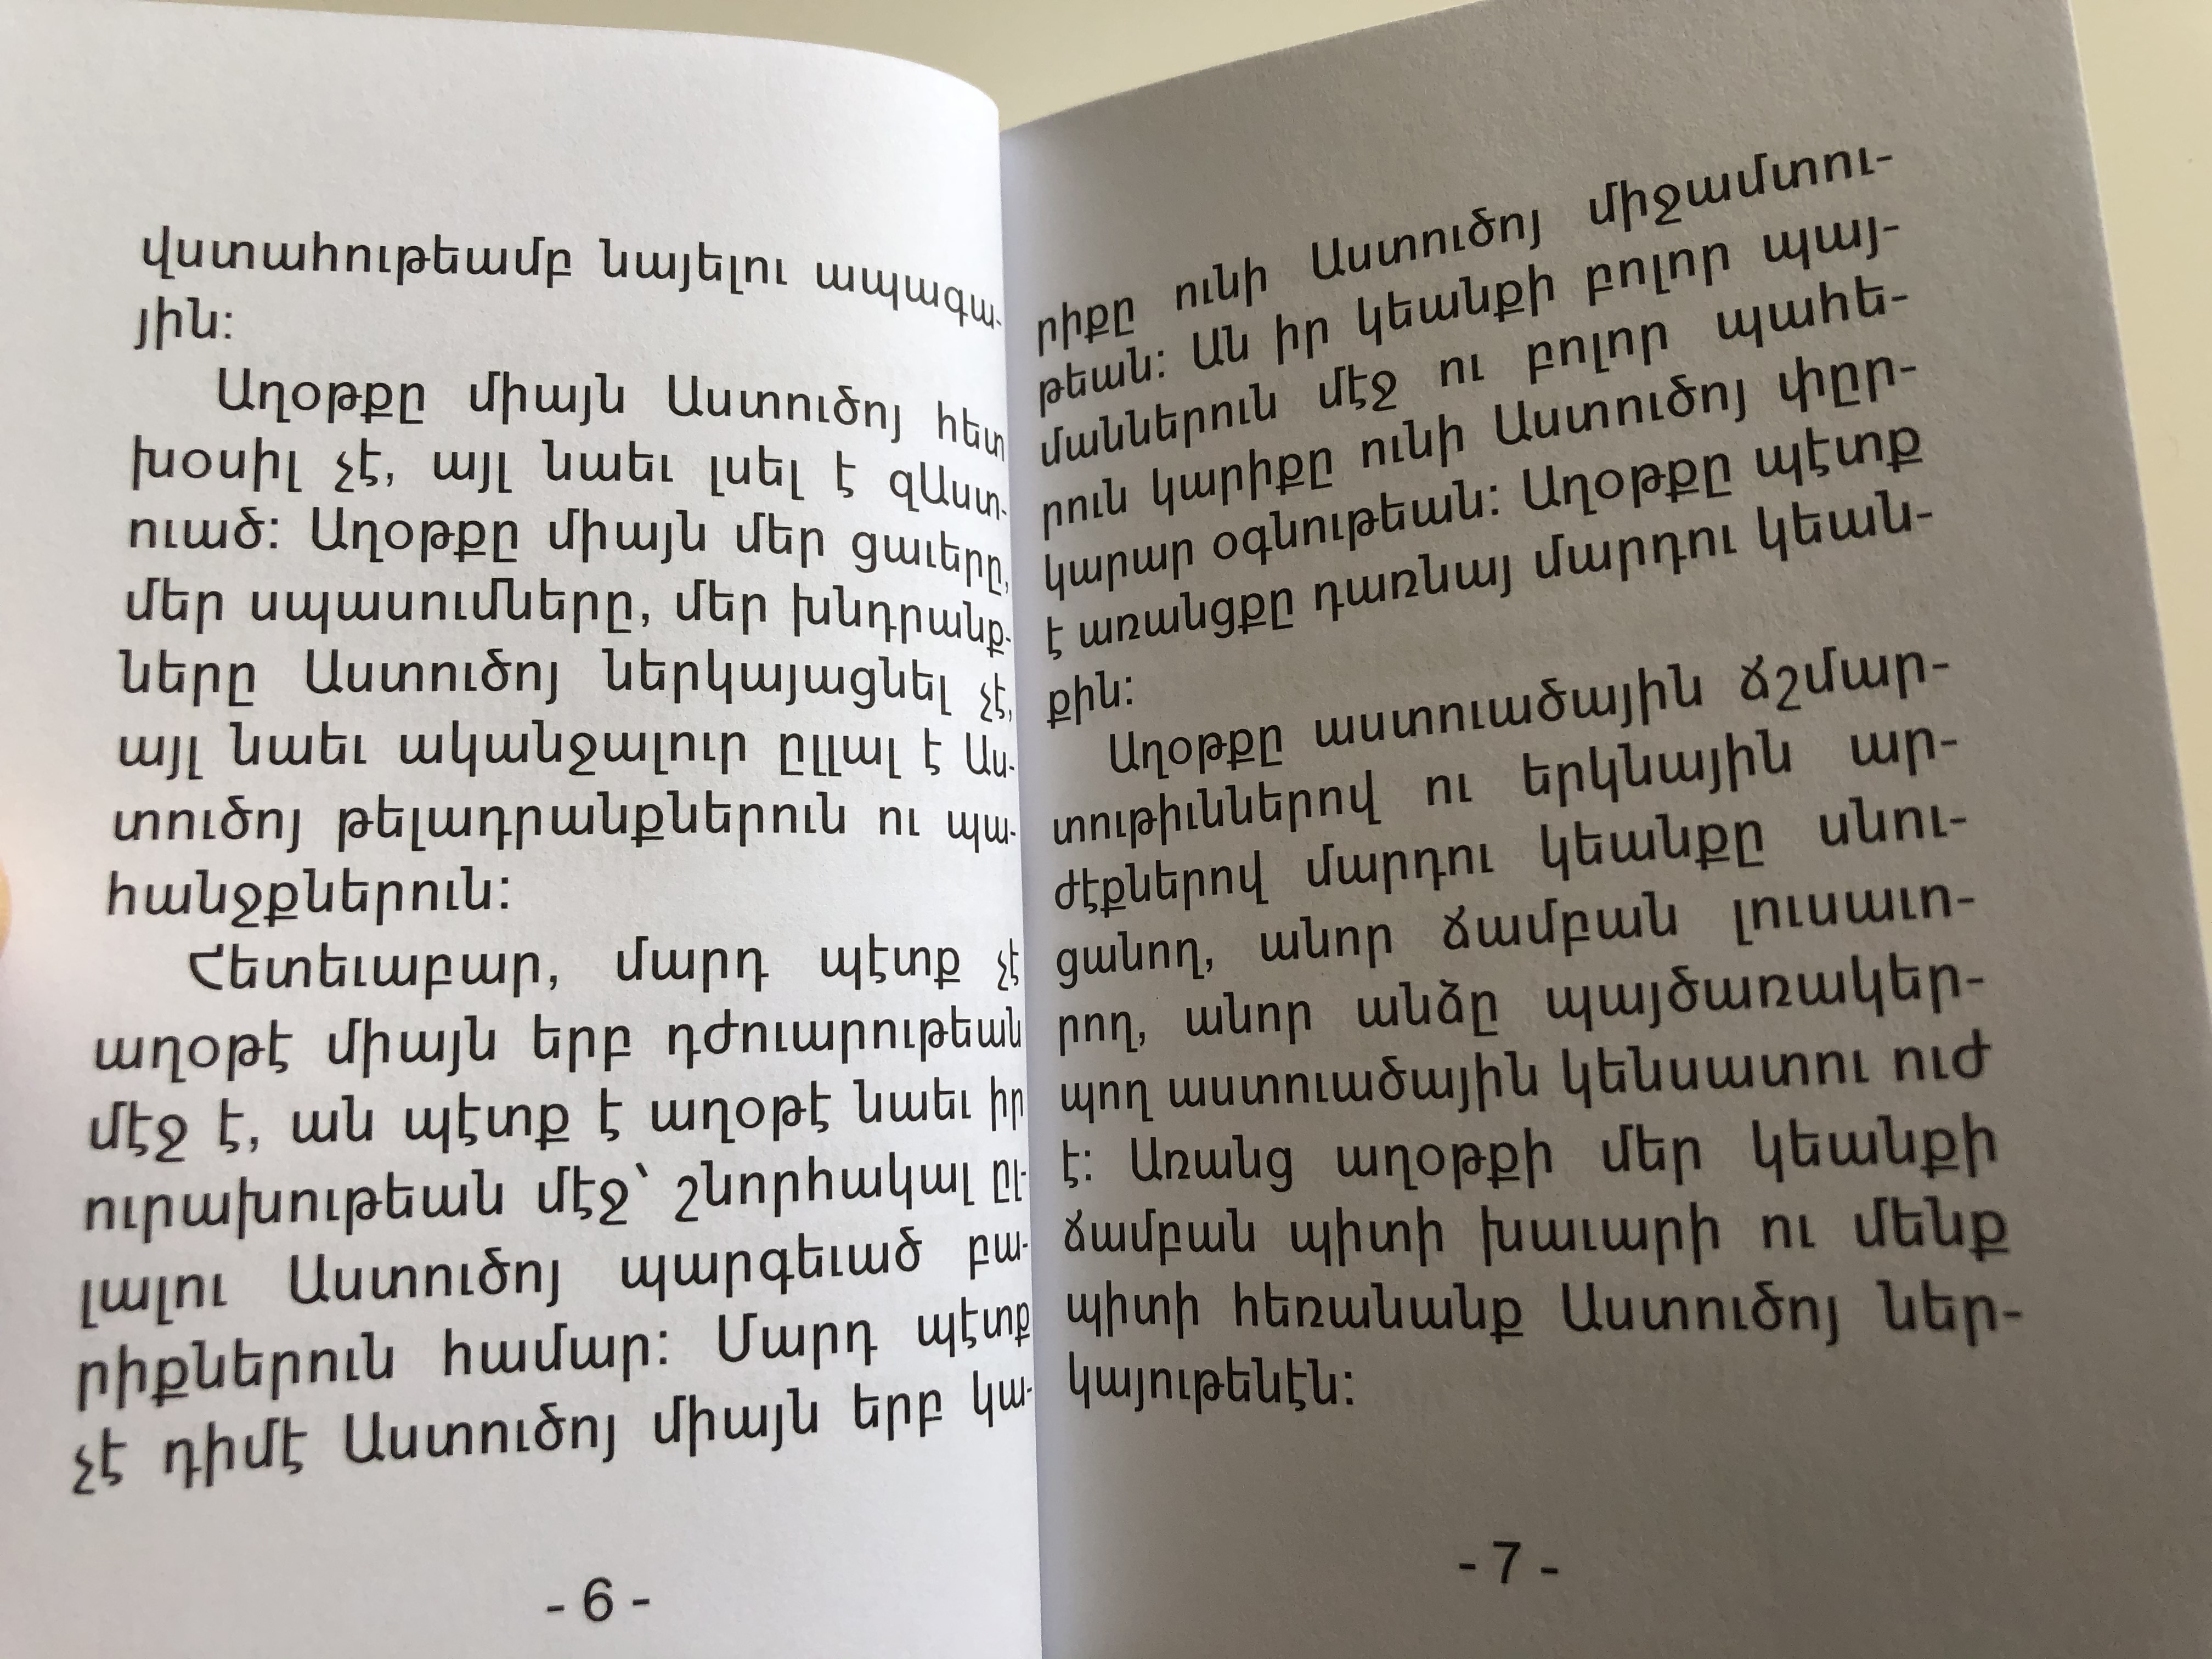 -my-prayer-armenian-language-catholic-prayer-book-5-.jpg